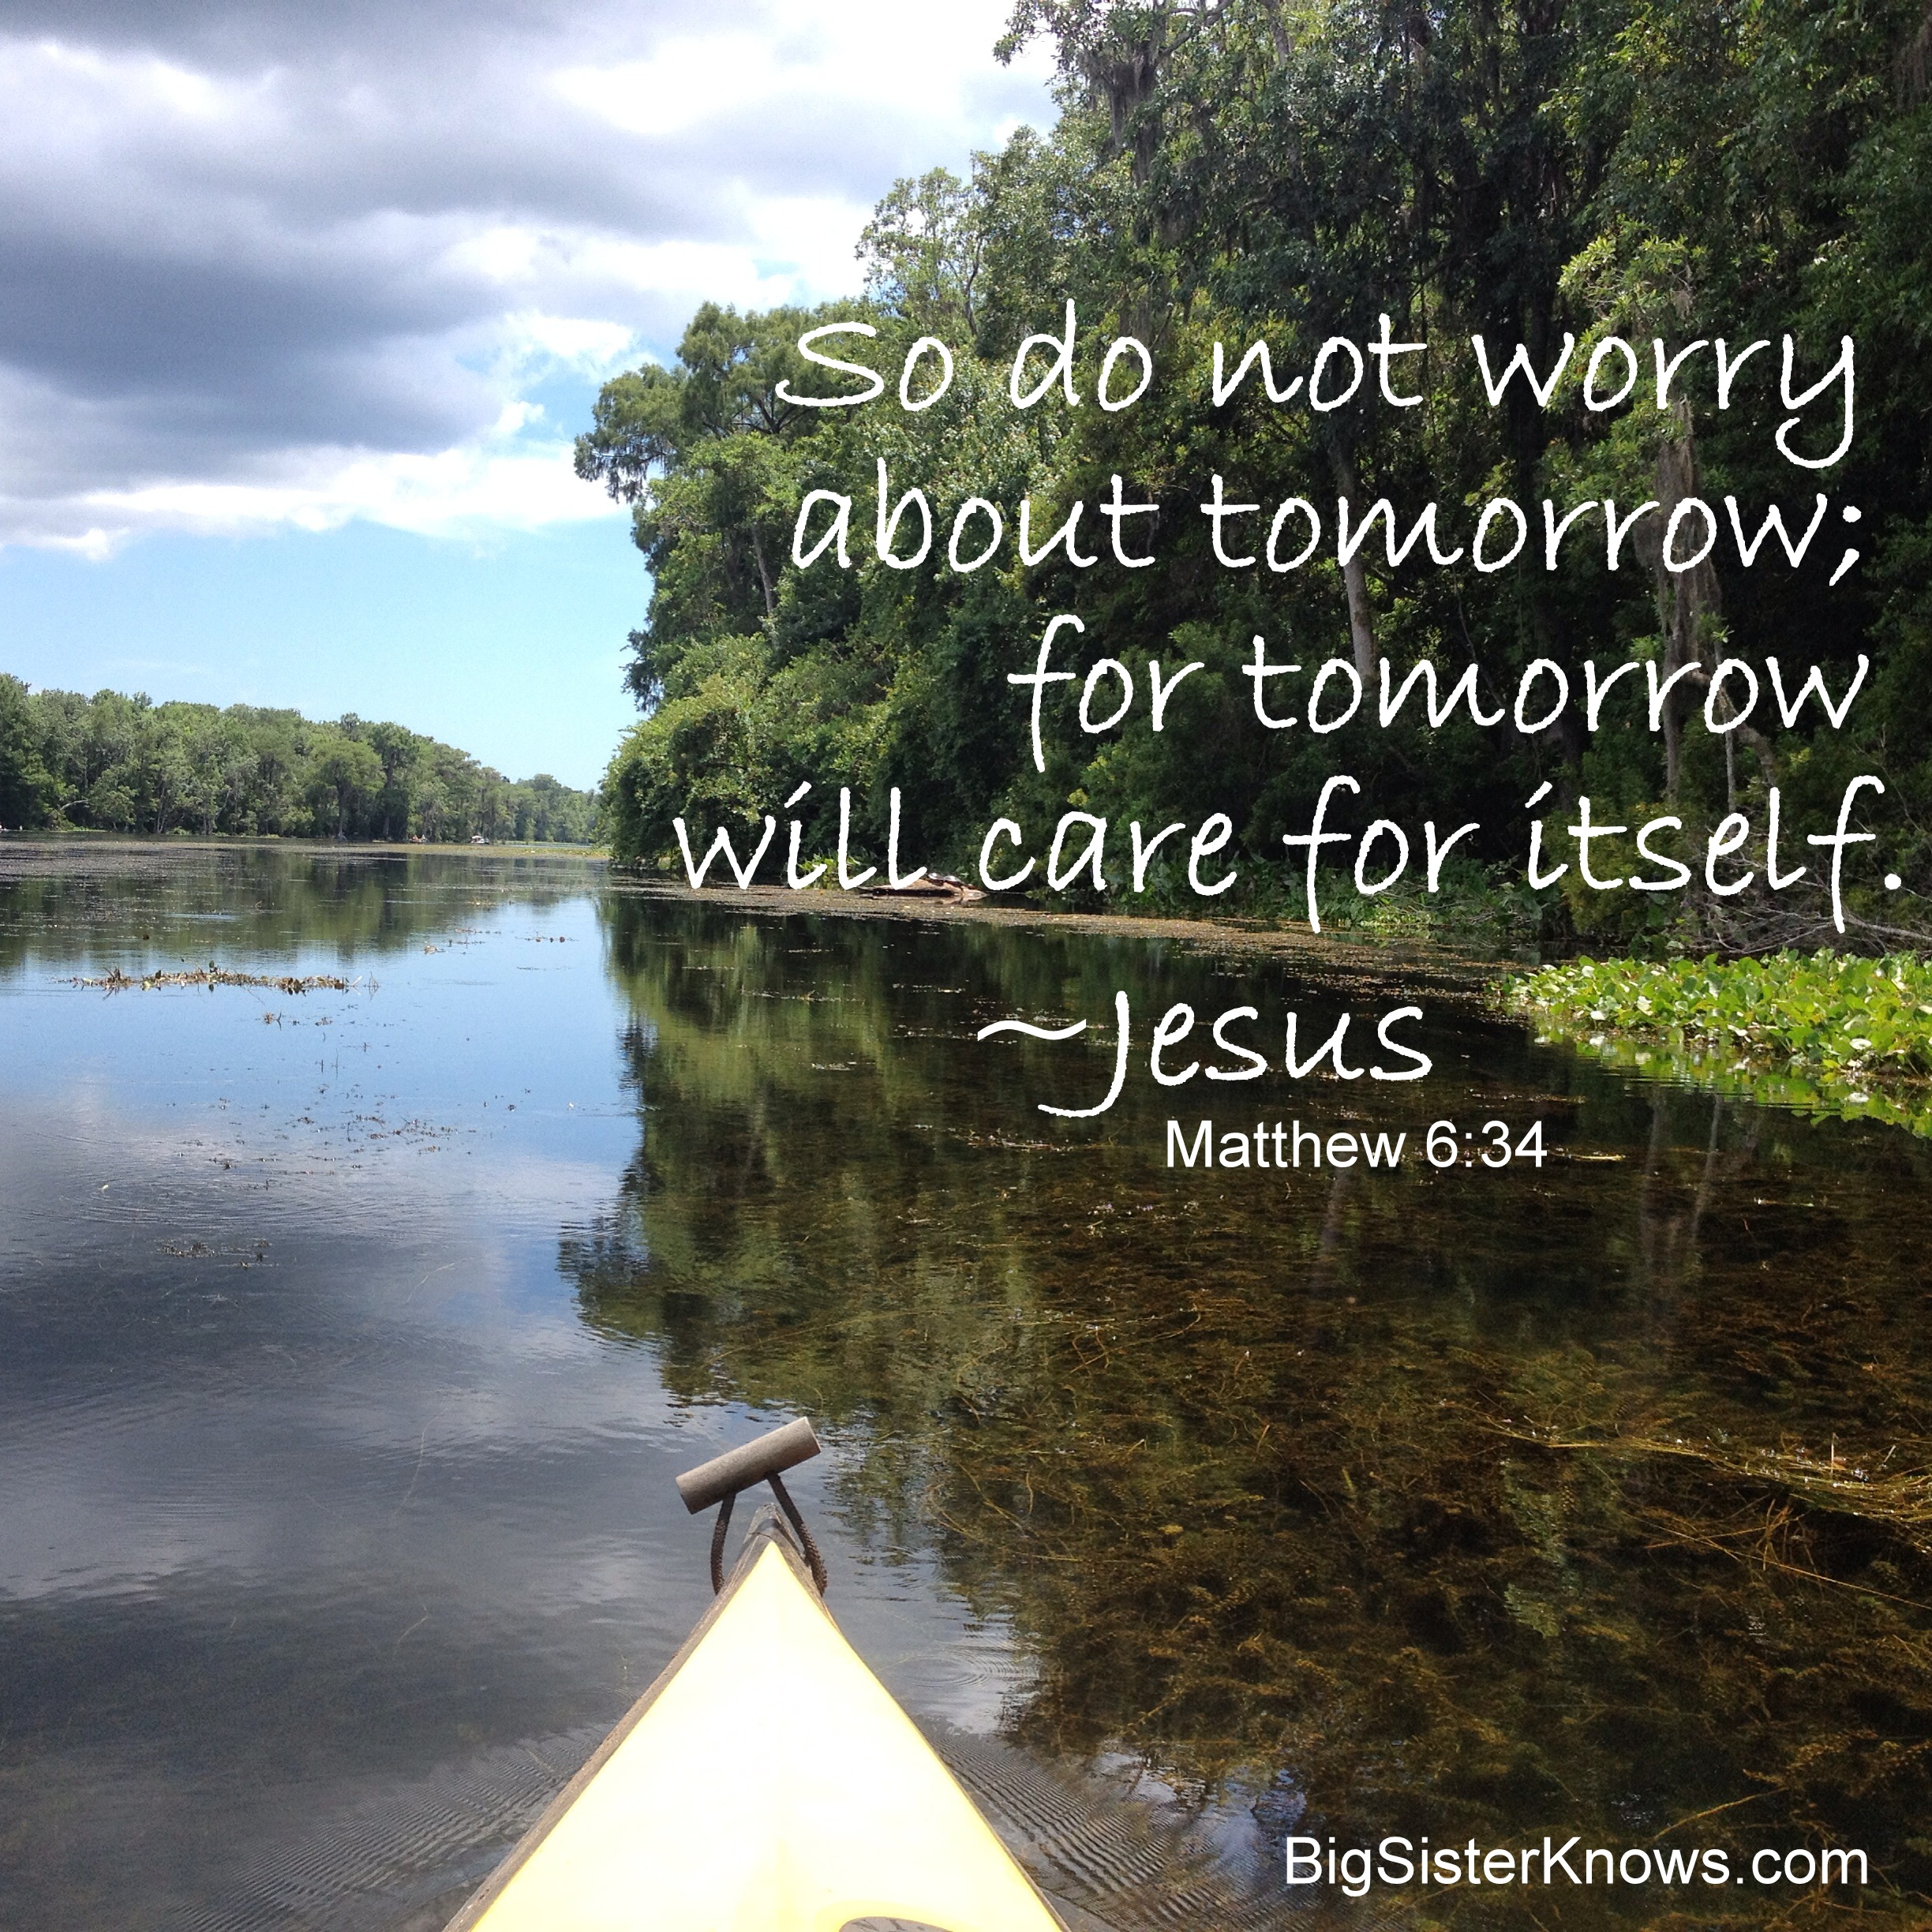 "Worry" is not a word often spoken in a kayak.